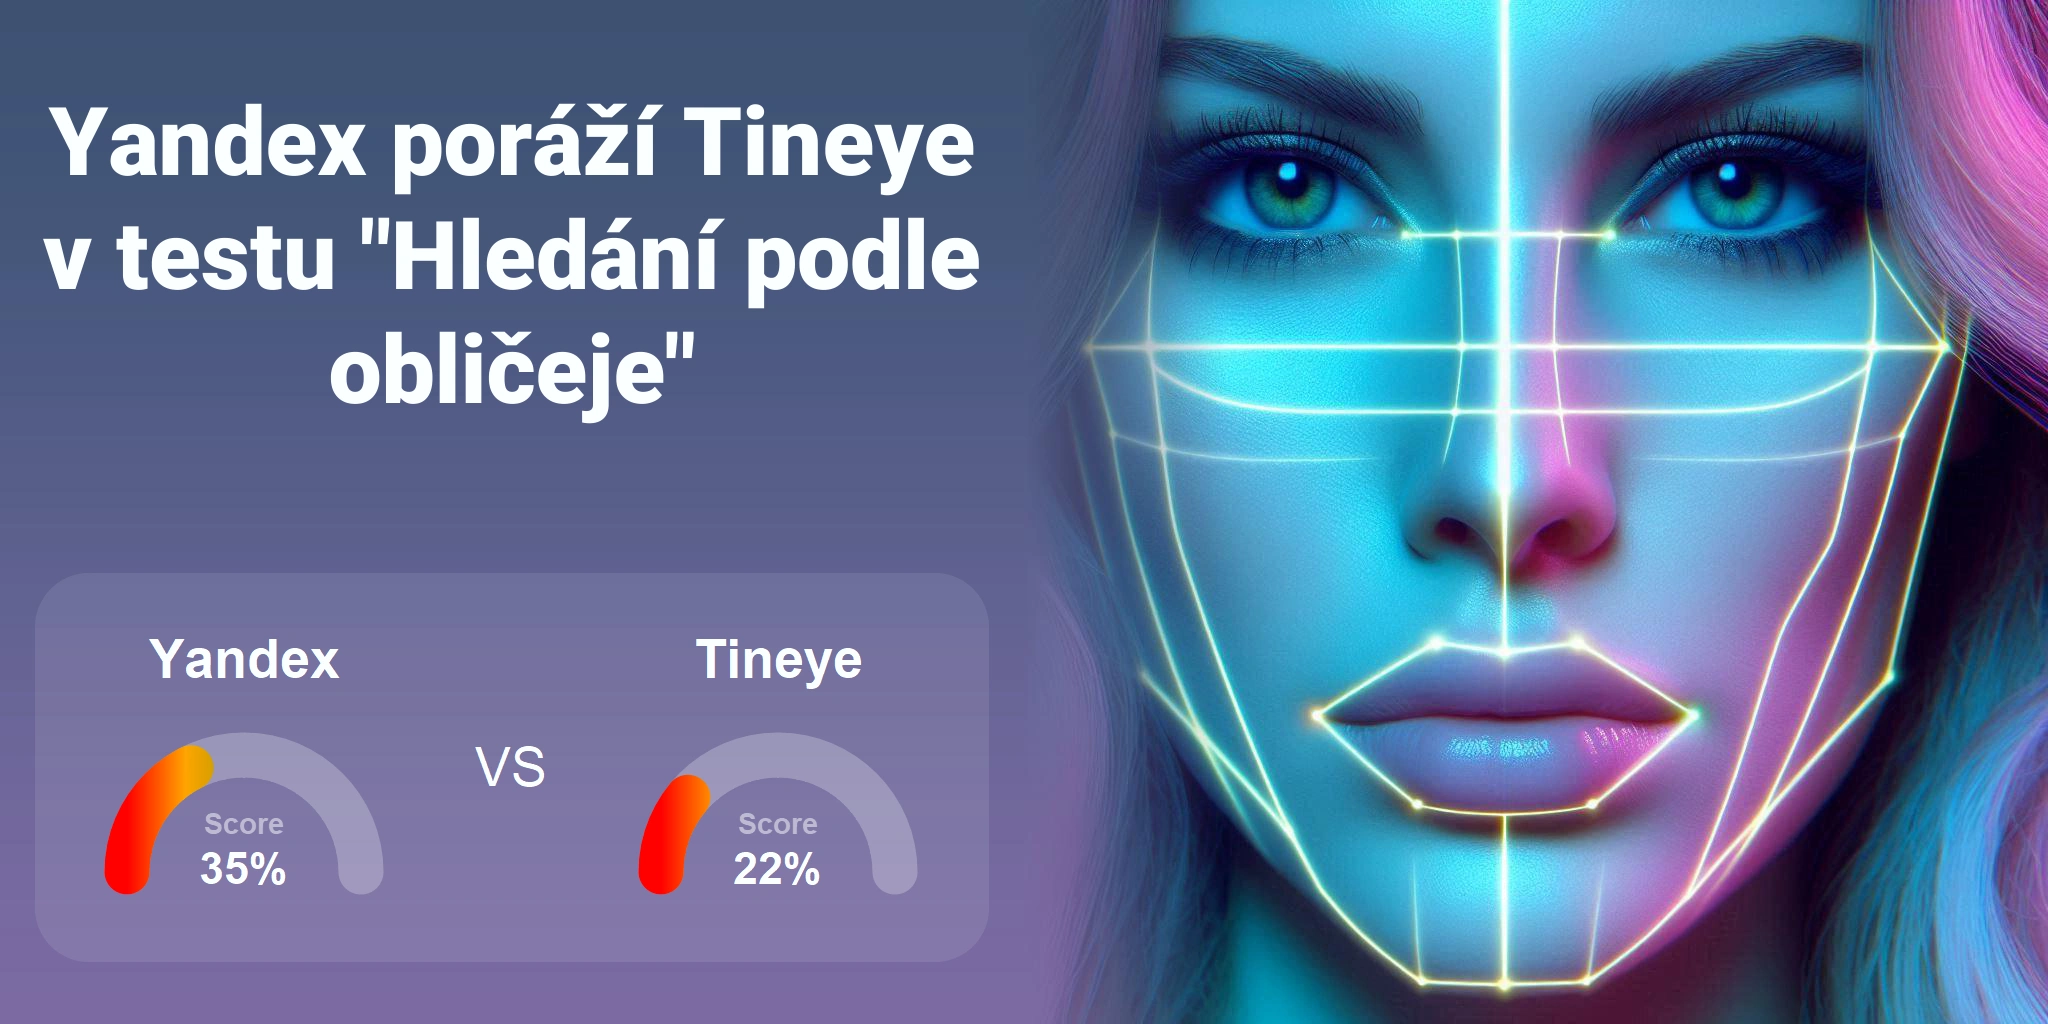 Tineye.com vs Yandex.com